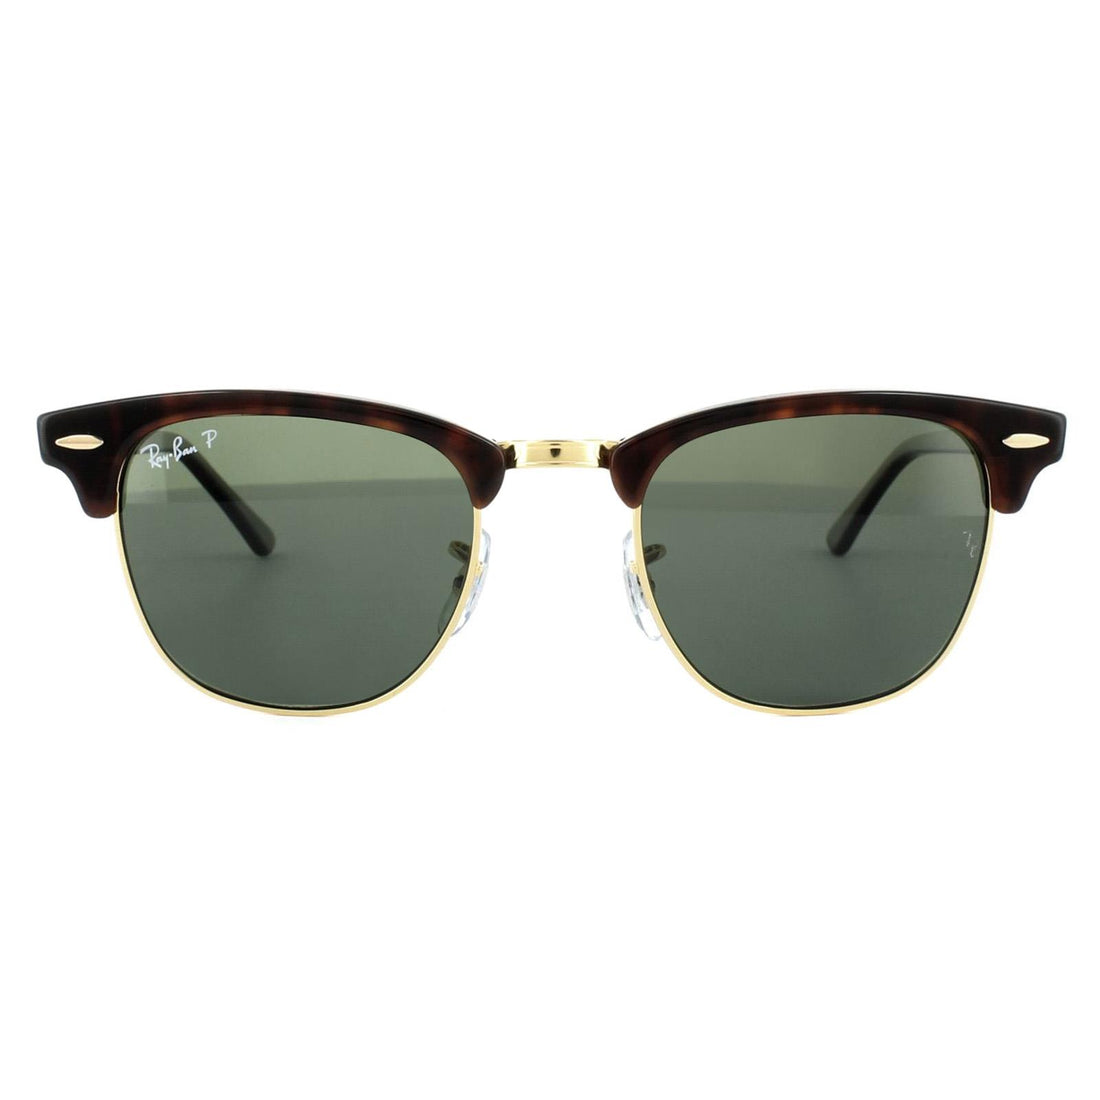 Rayban Sunglasses Clubmaster 3016 990/58 Red Havana Green Polarized Large 51mm